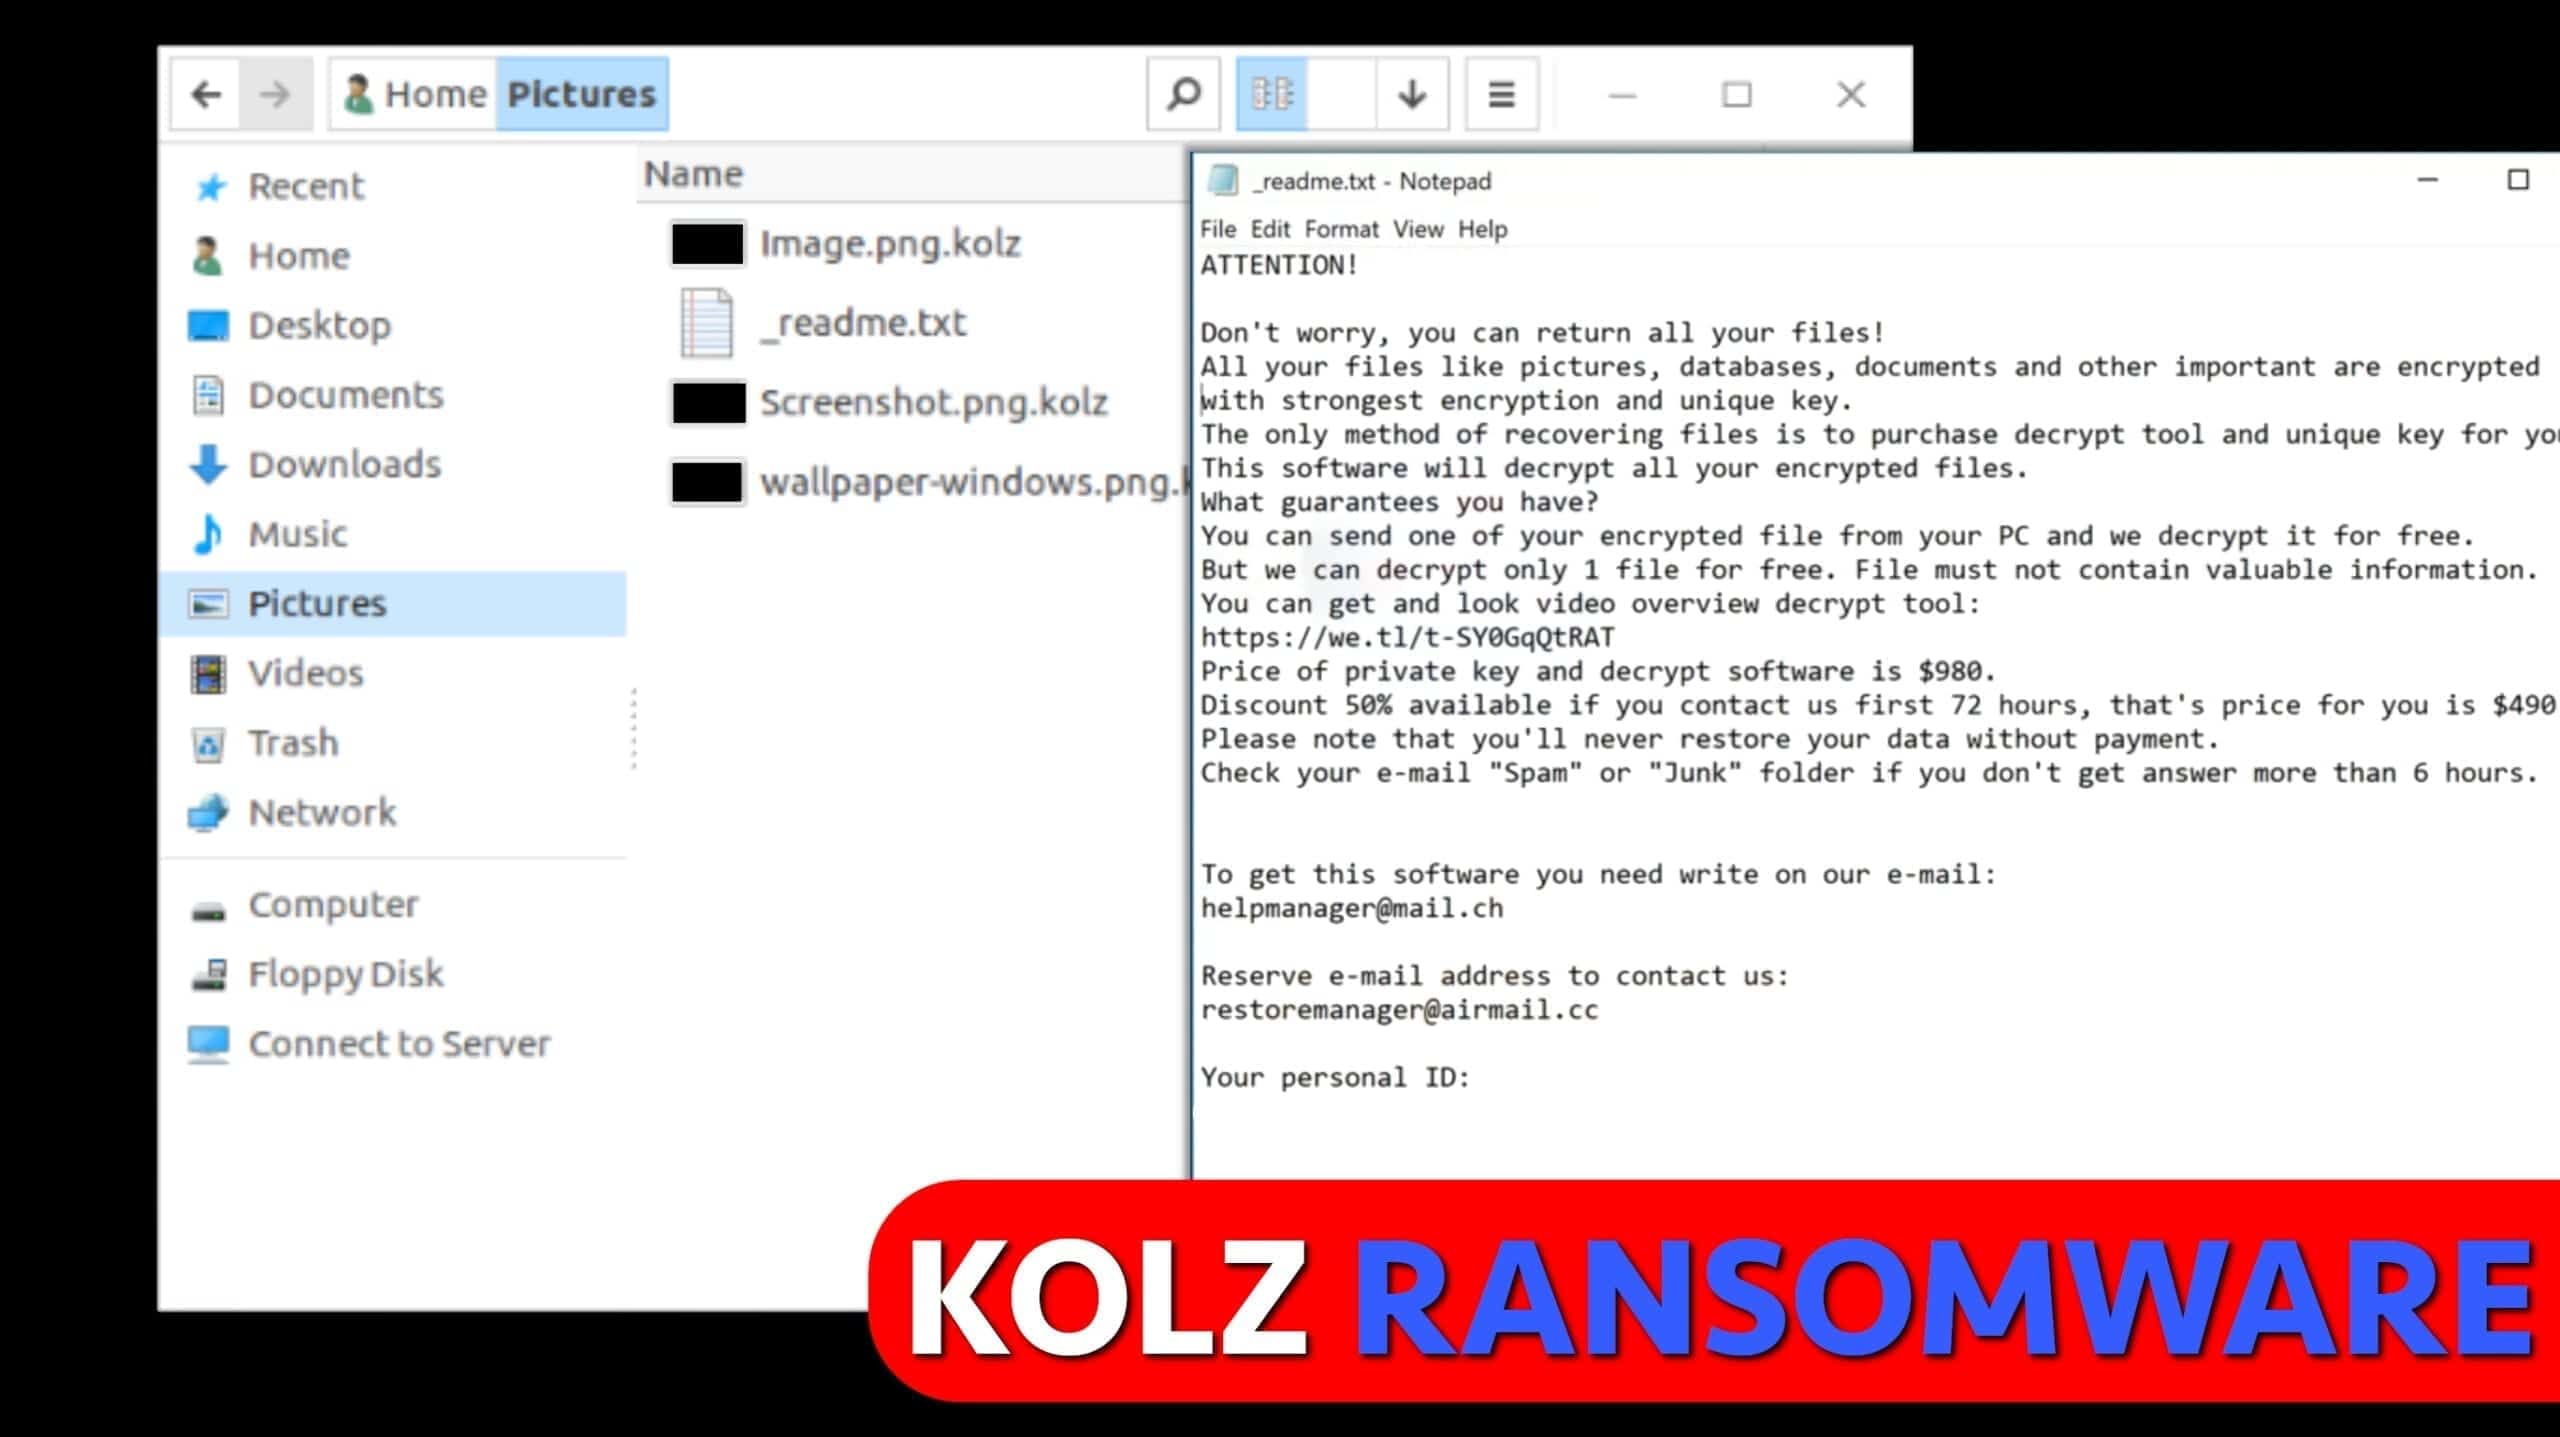 kolz ransomware virus removal instructions